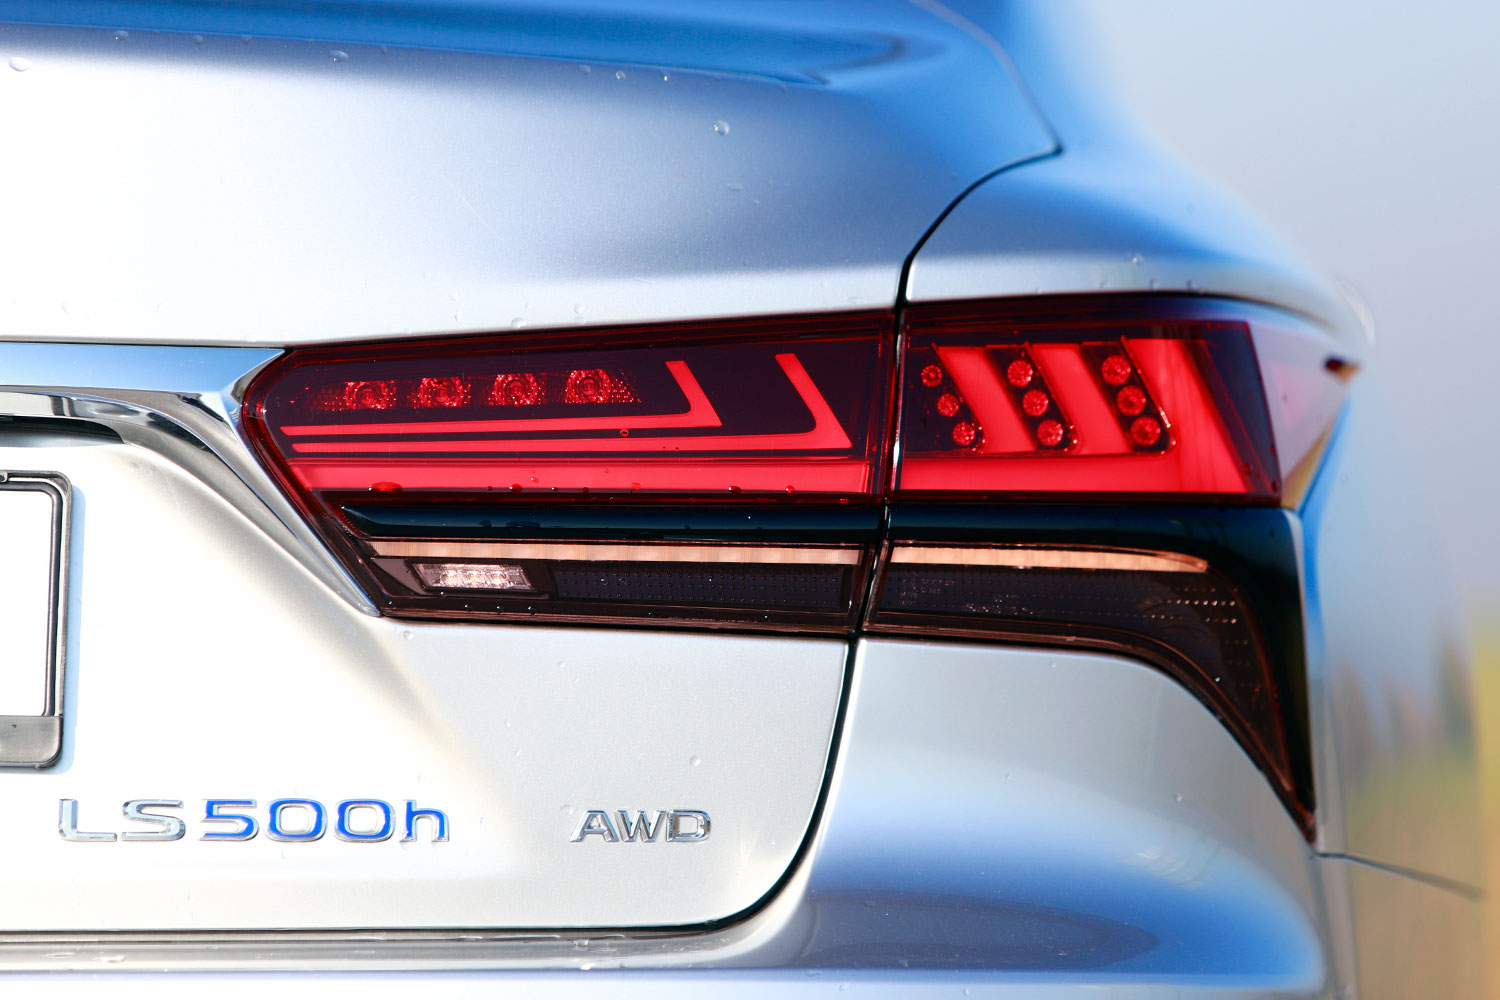 Vajon mennyi luxus fér bele 50 millióba? – Lexus LS 500h AWD 14